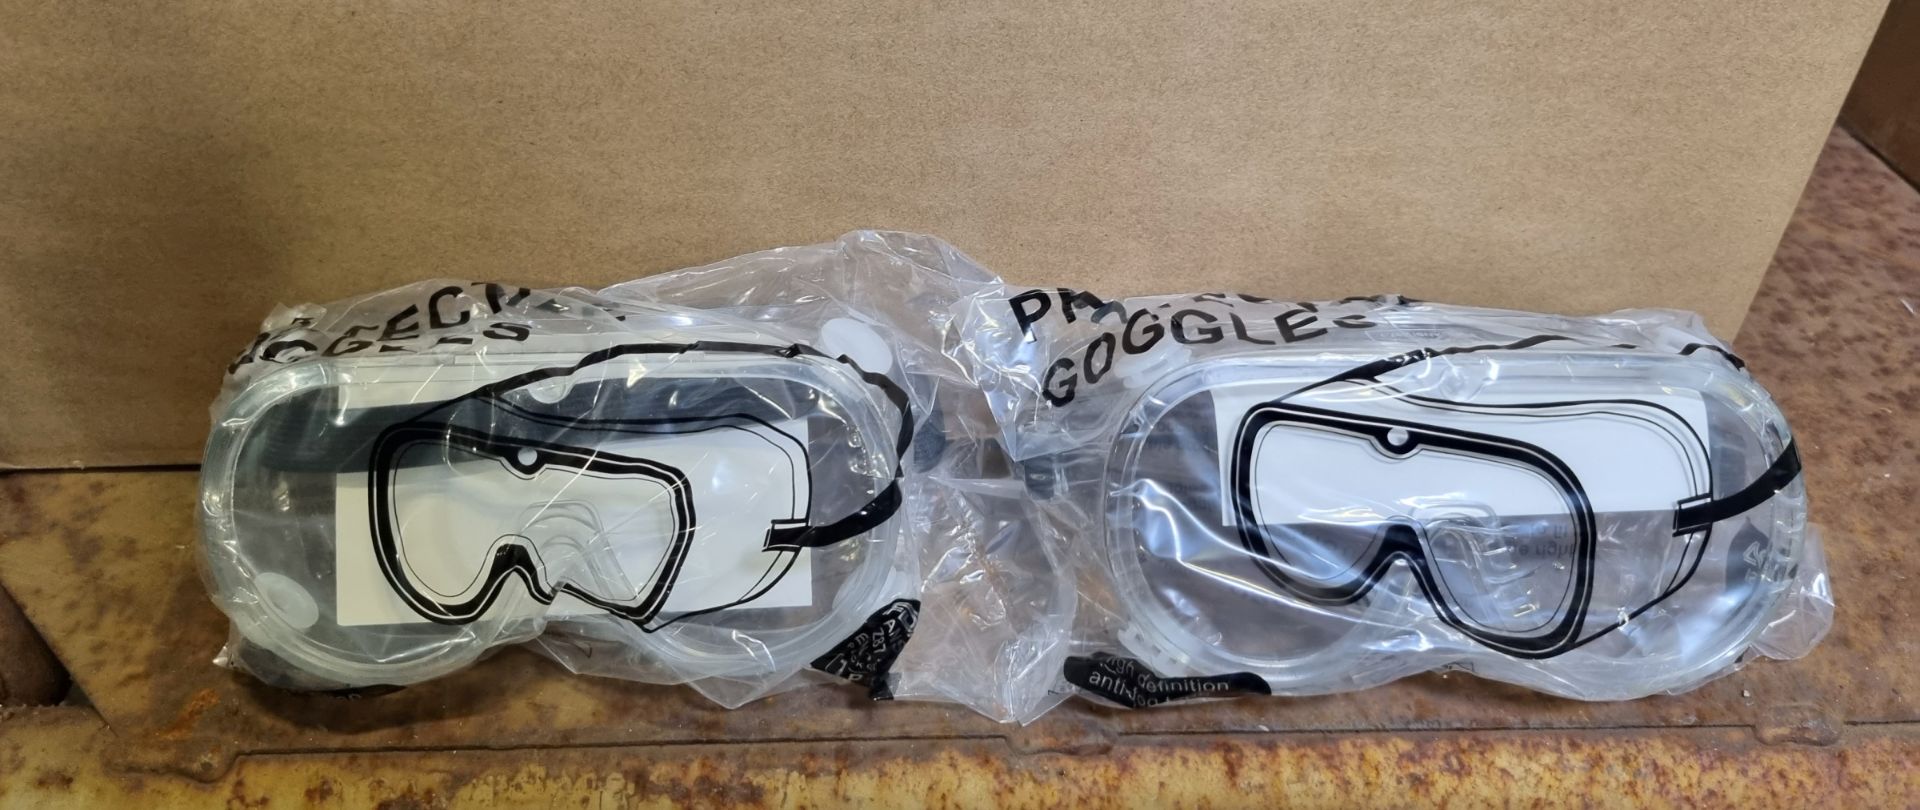 Box of goggles - 150 pairs per box